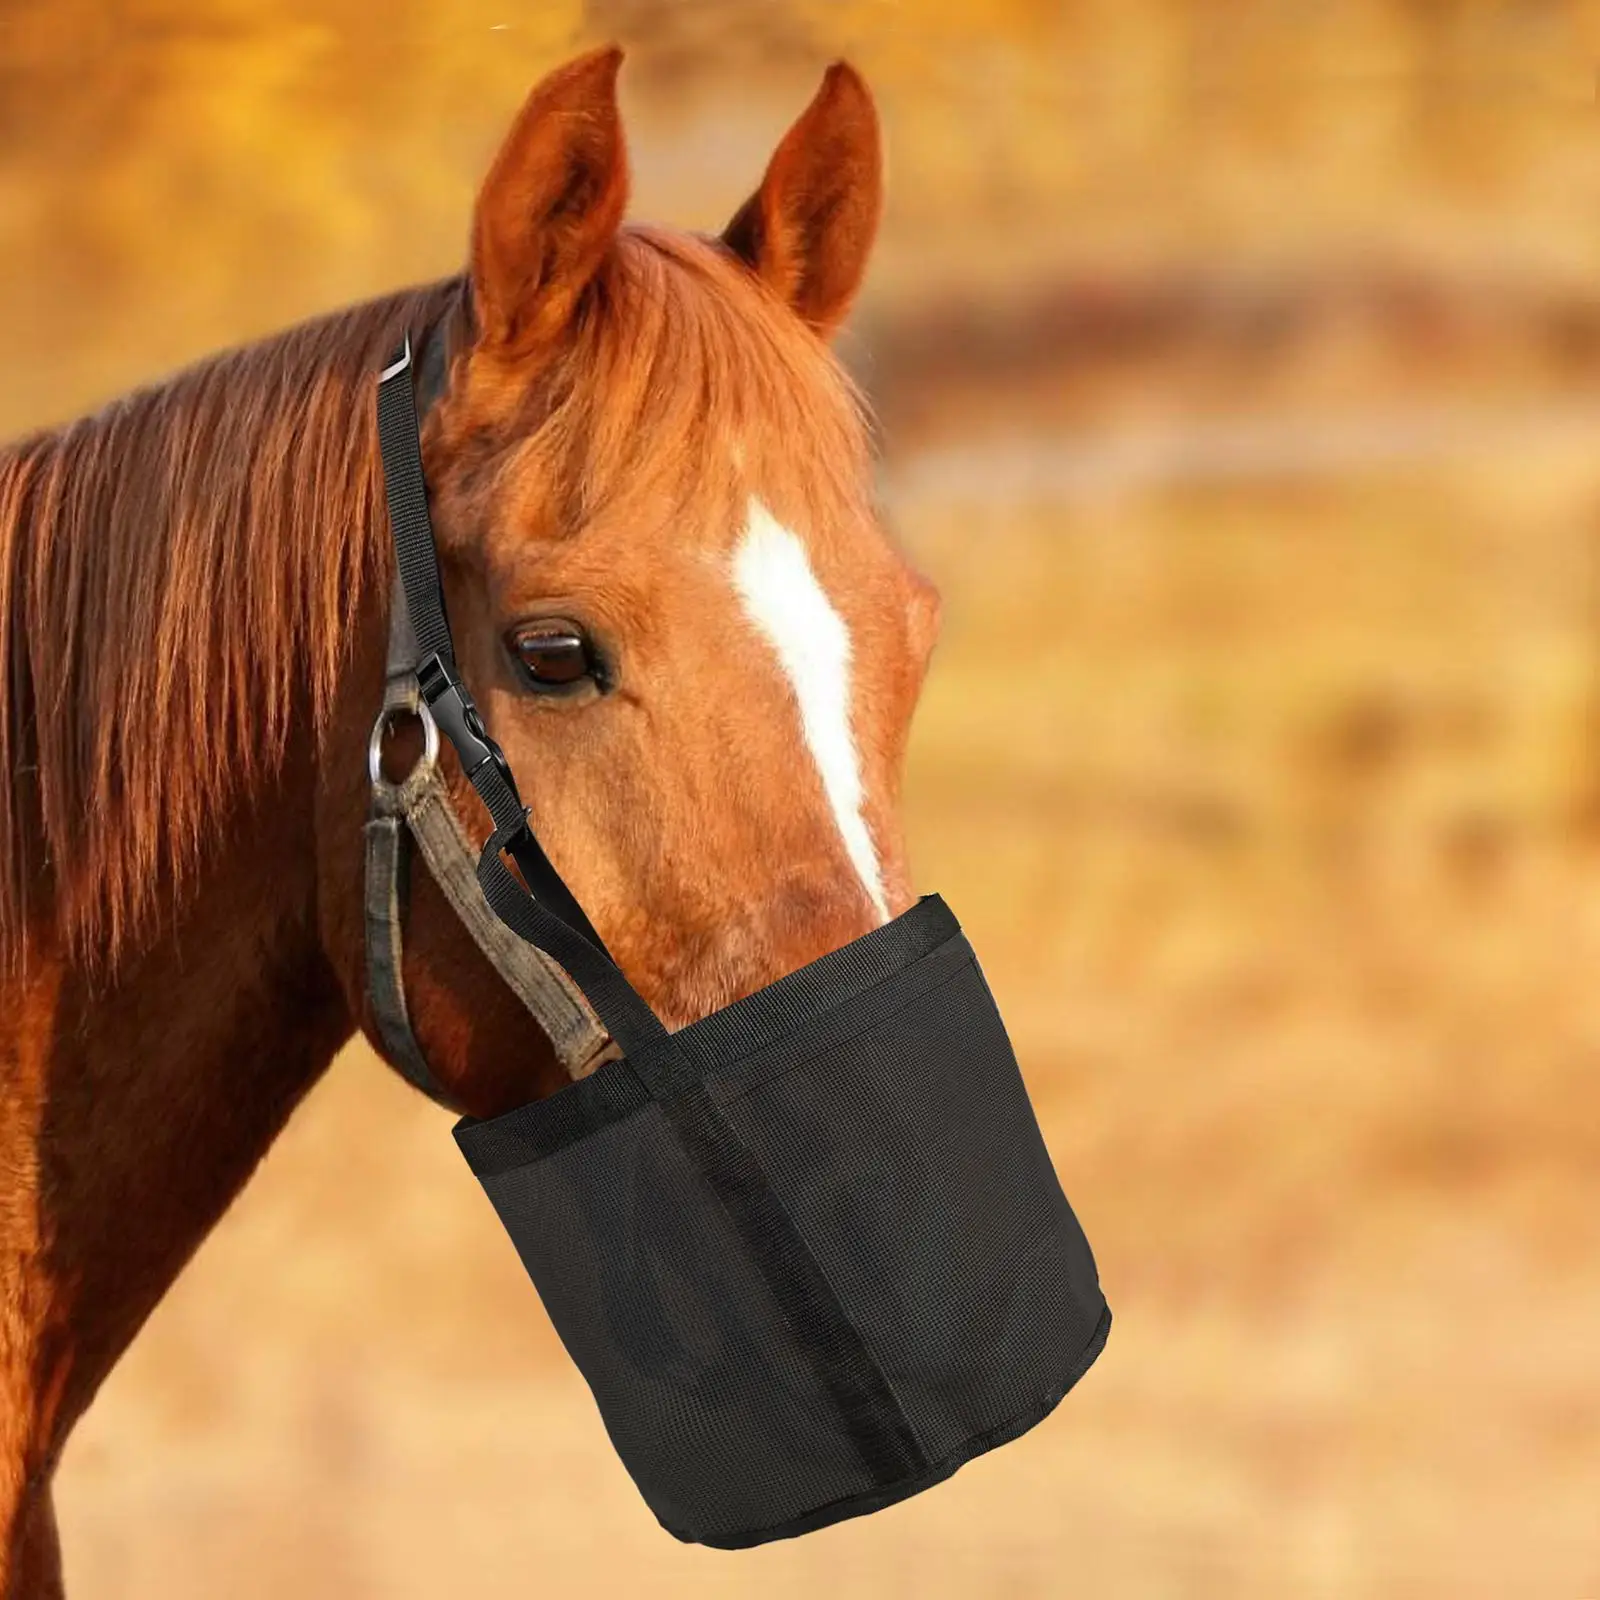 Horse feed Bag Elastic Strap Heavy Duty PVC Mesh Bag Adjustable Hay Feeder